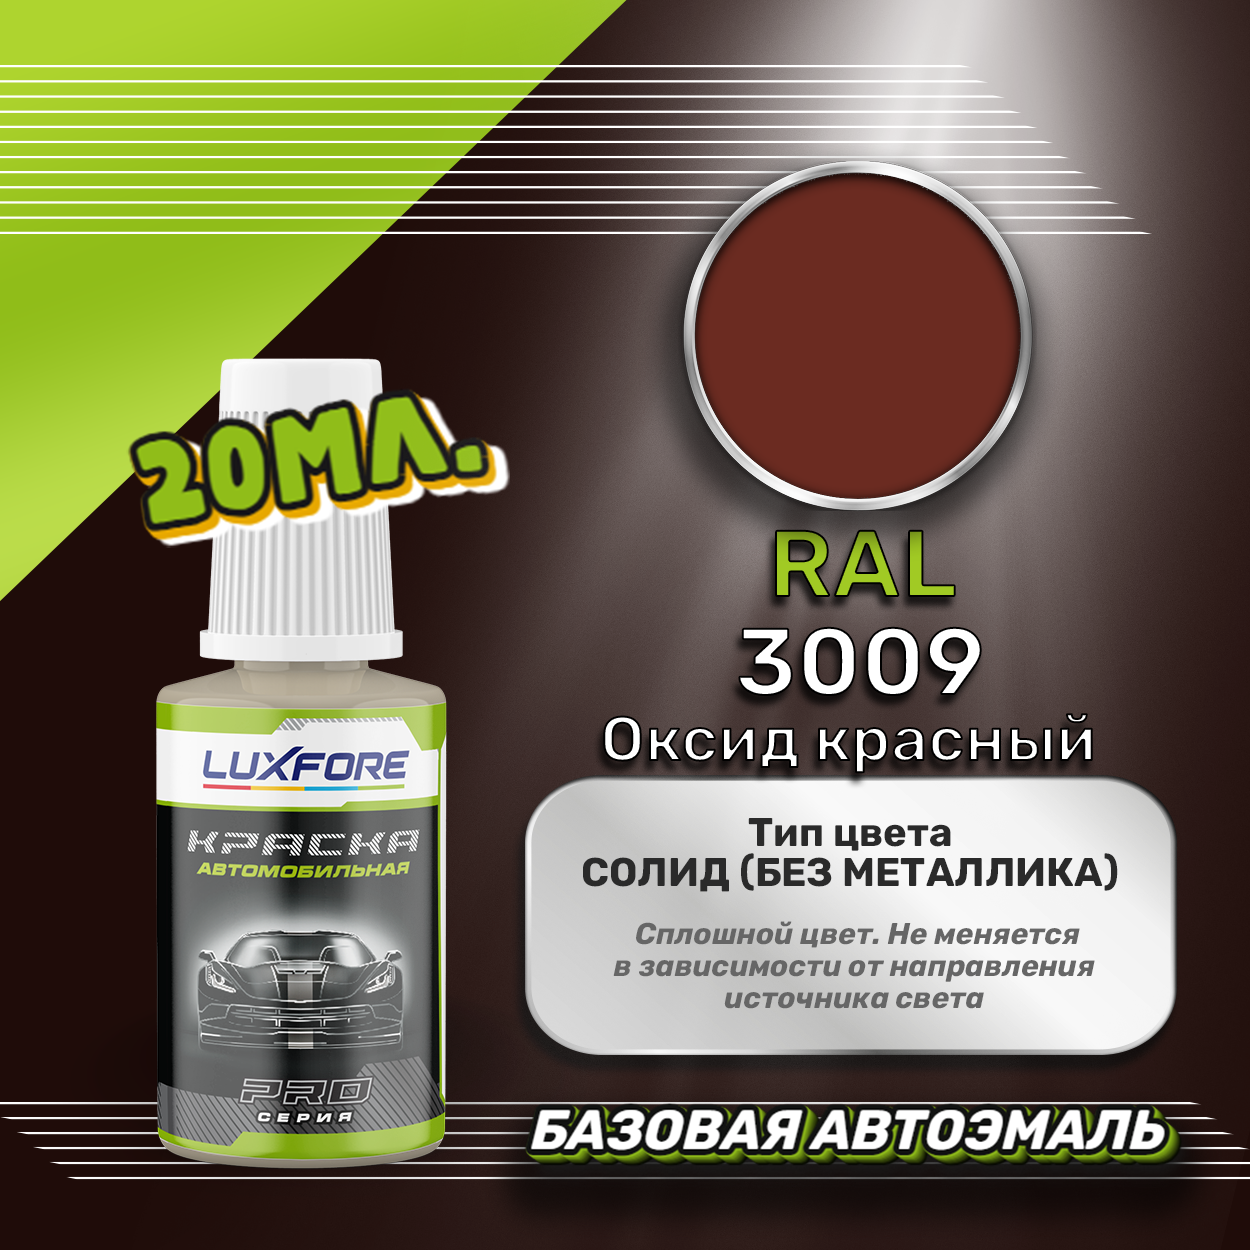 Luxfore автоэмаль базовая RAL 3009 Оксид красный подкраска 20 мл.